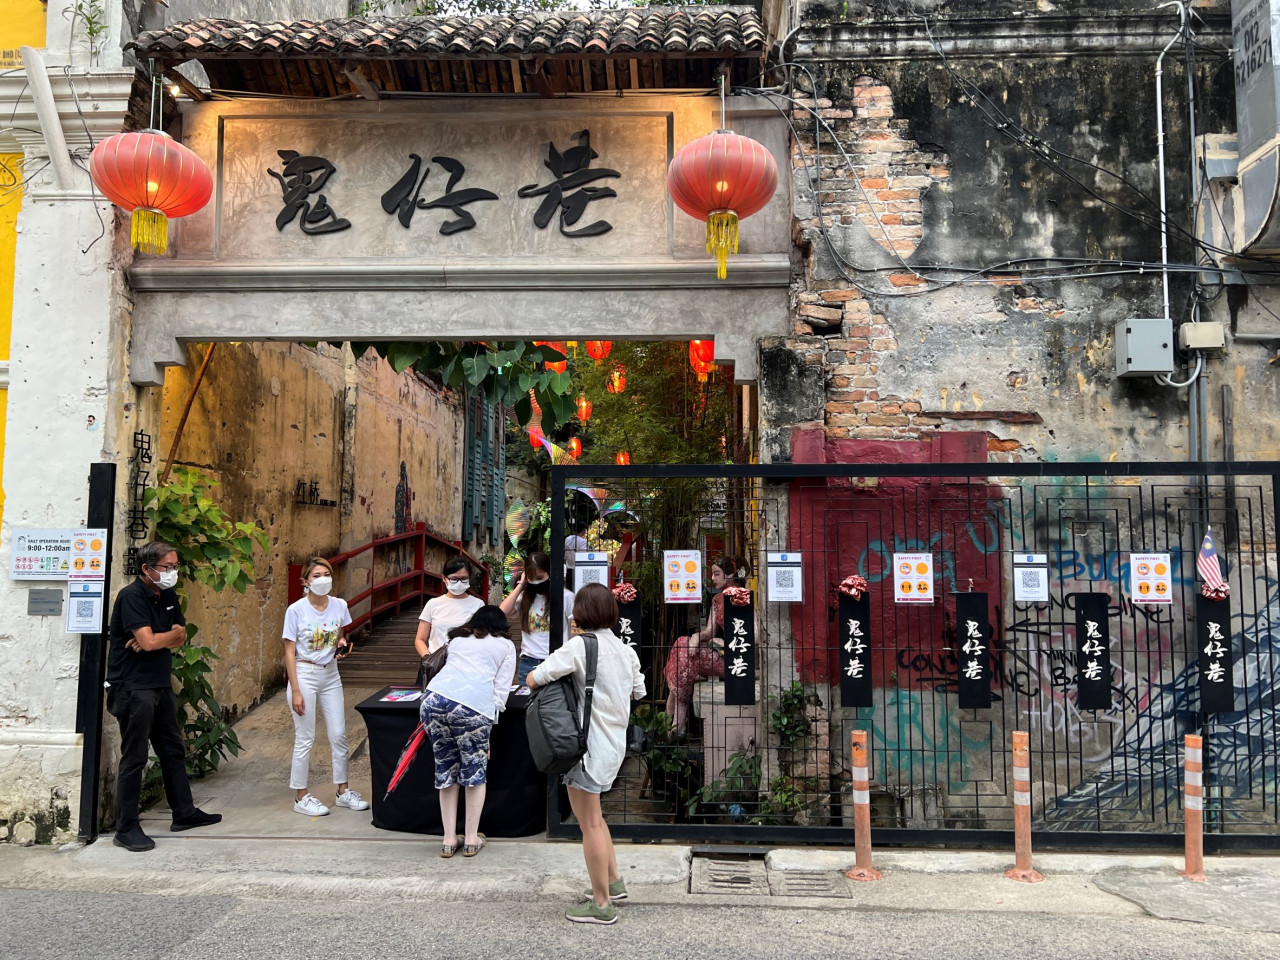 The entrance to Kwai Chai Hong. – Haikal Fernandez pic